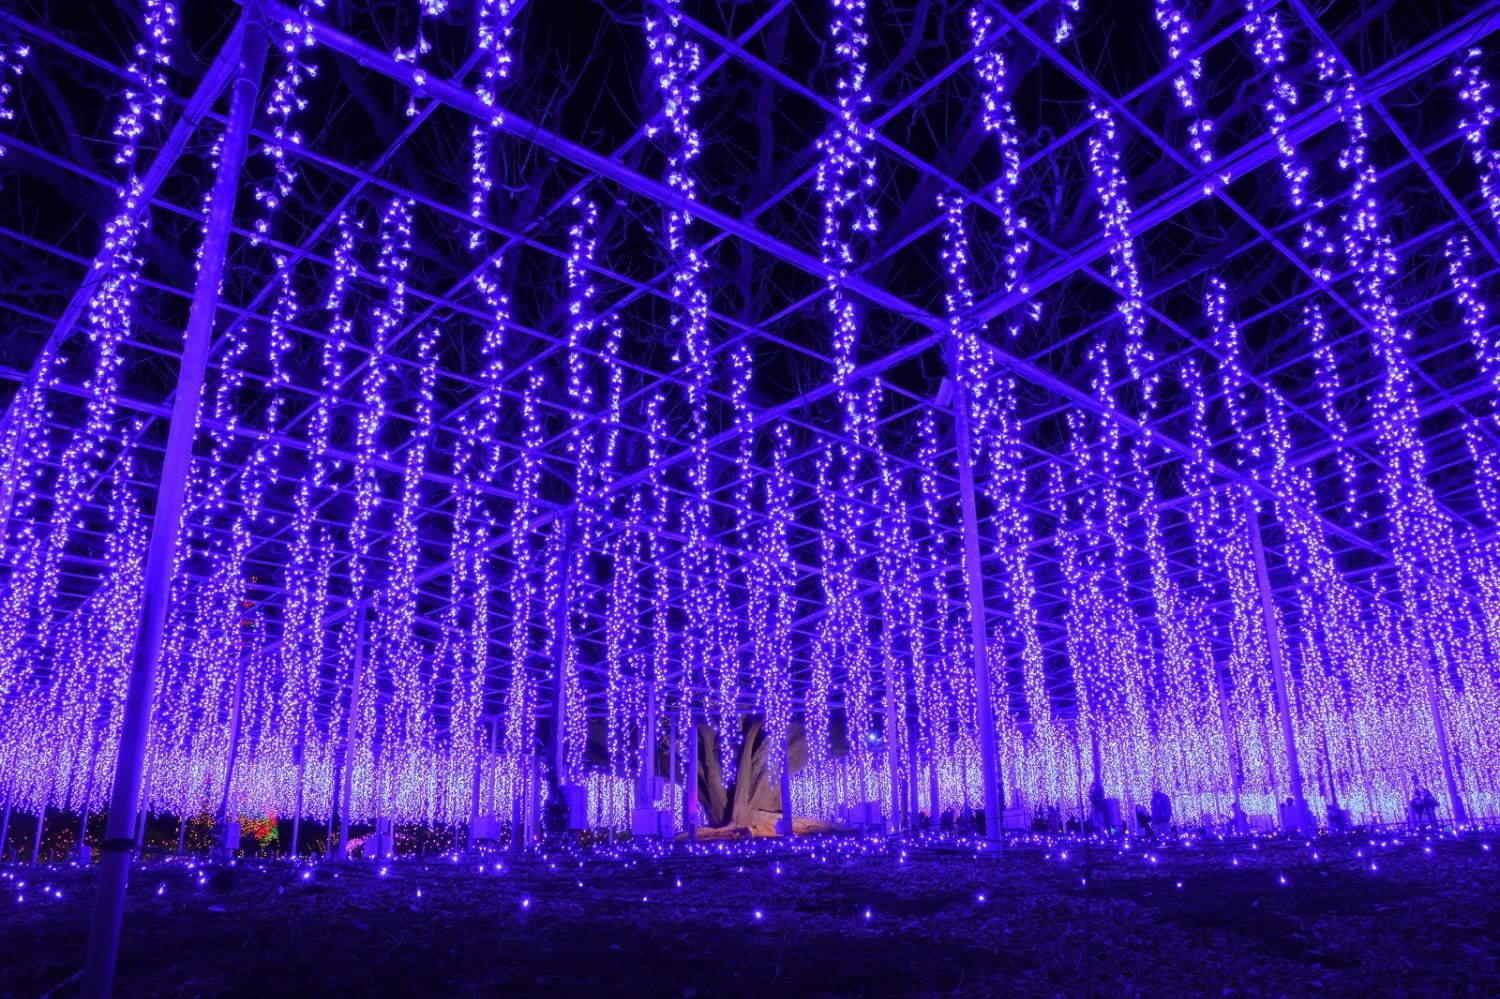 Ashikaga Flower Park Illumination 2020 In Japan Is A Sight To Behold